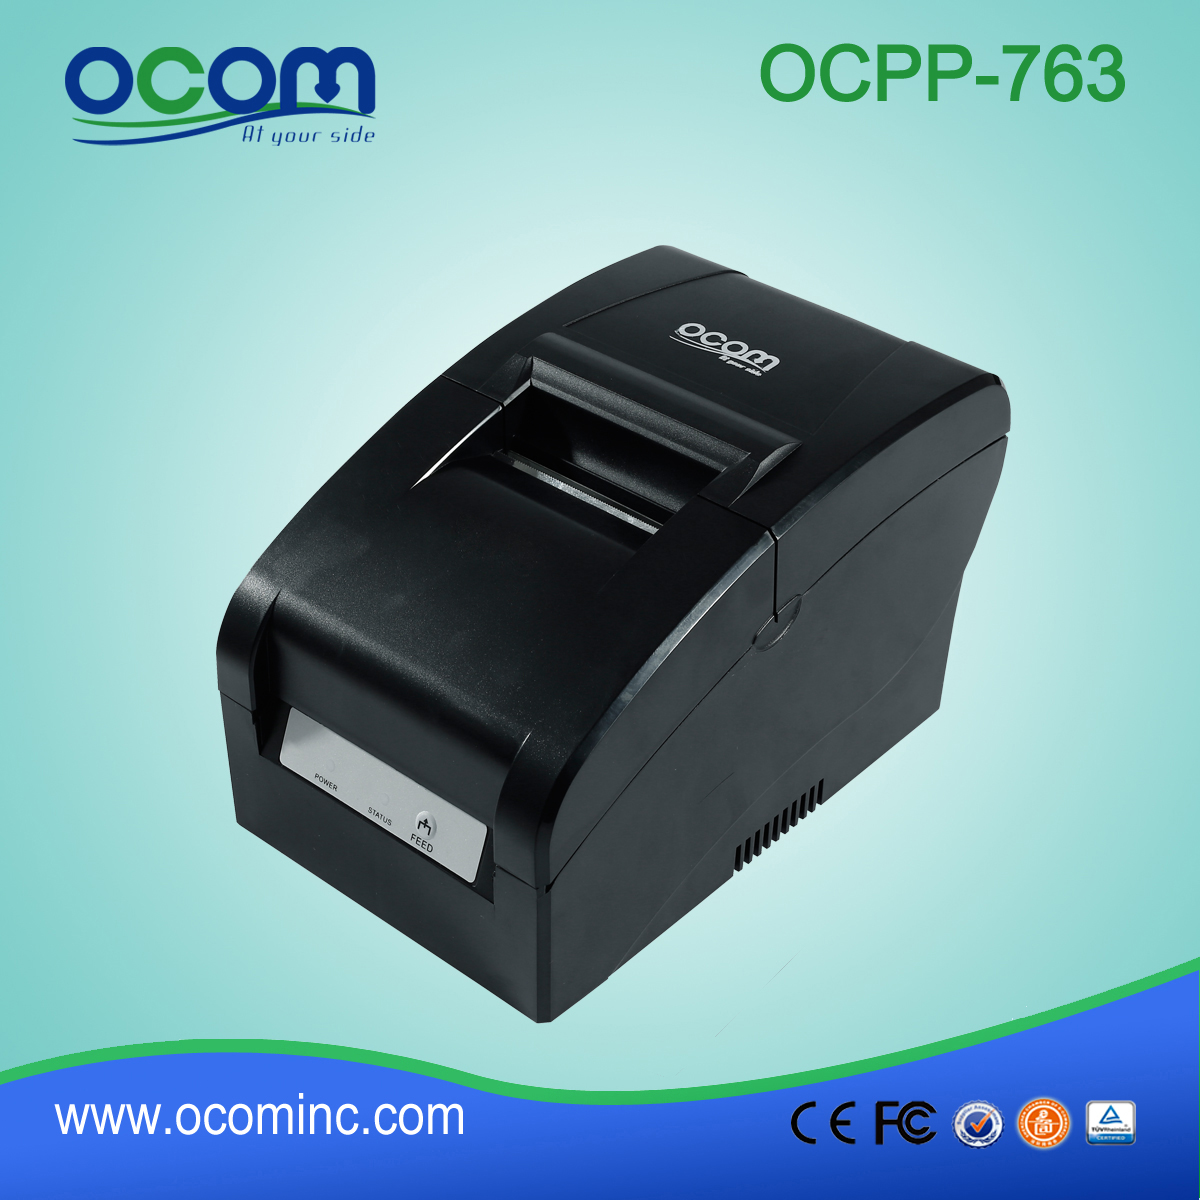 OCPP-763 Mini Impact Dot Matrix Printer With 76mm Width Paper Size For Cash Register